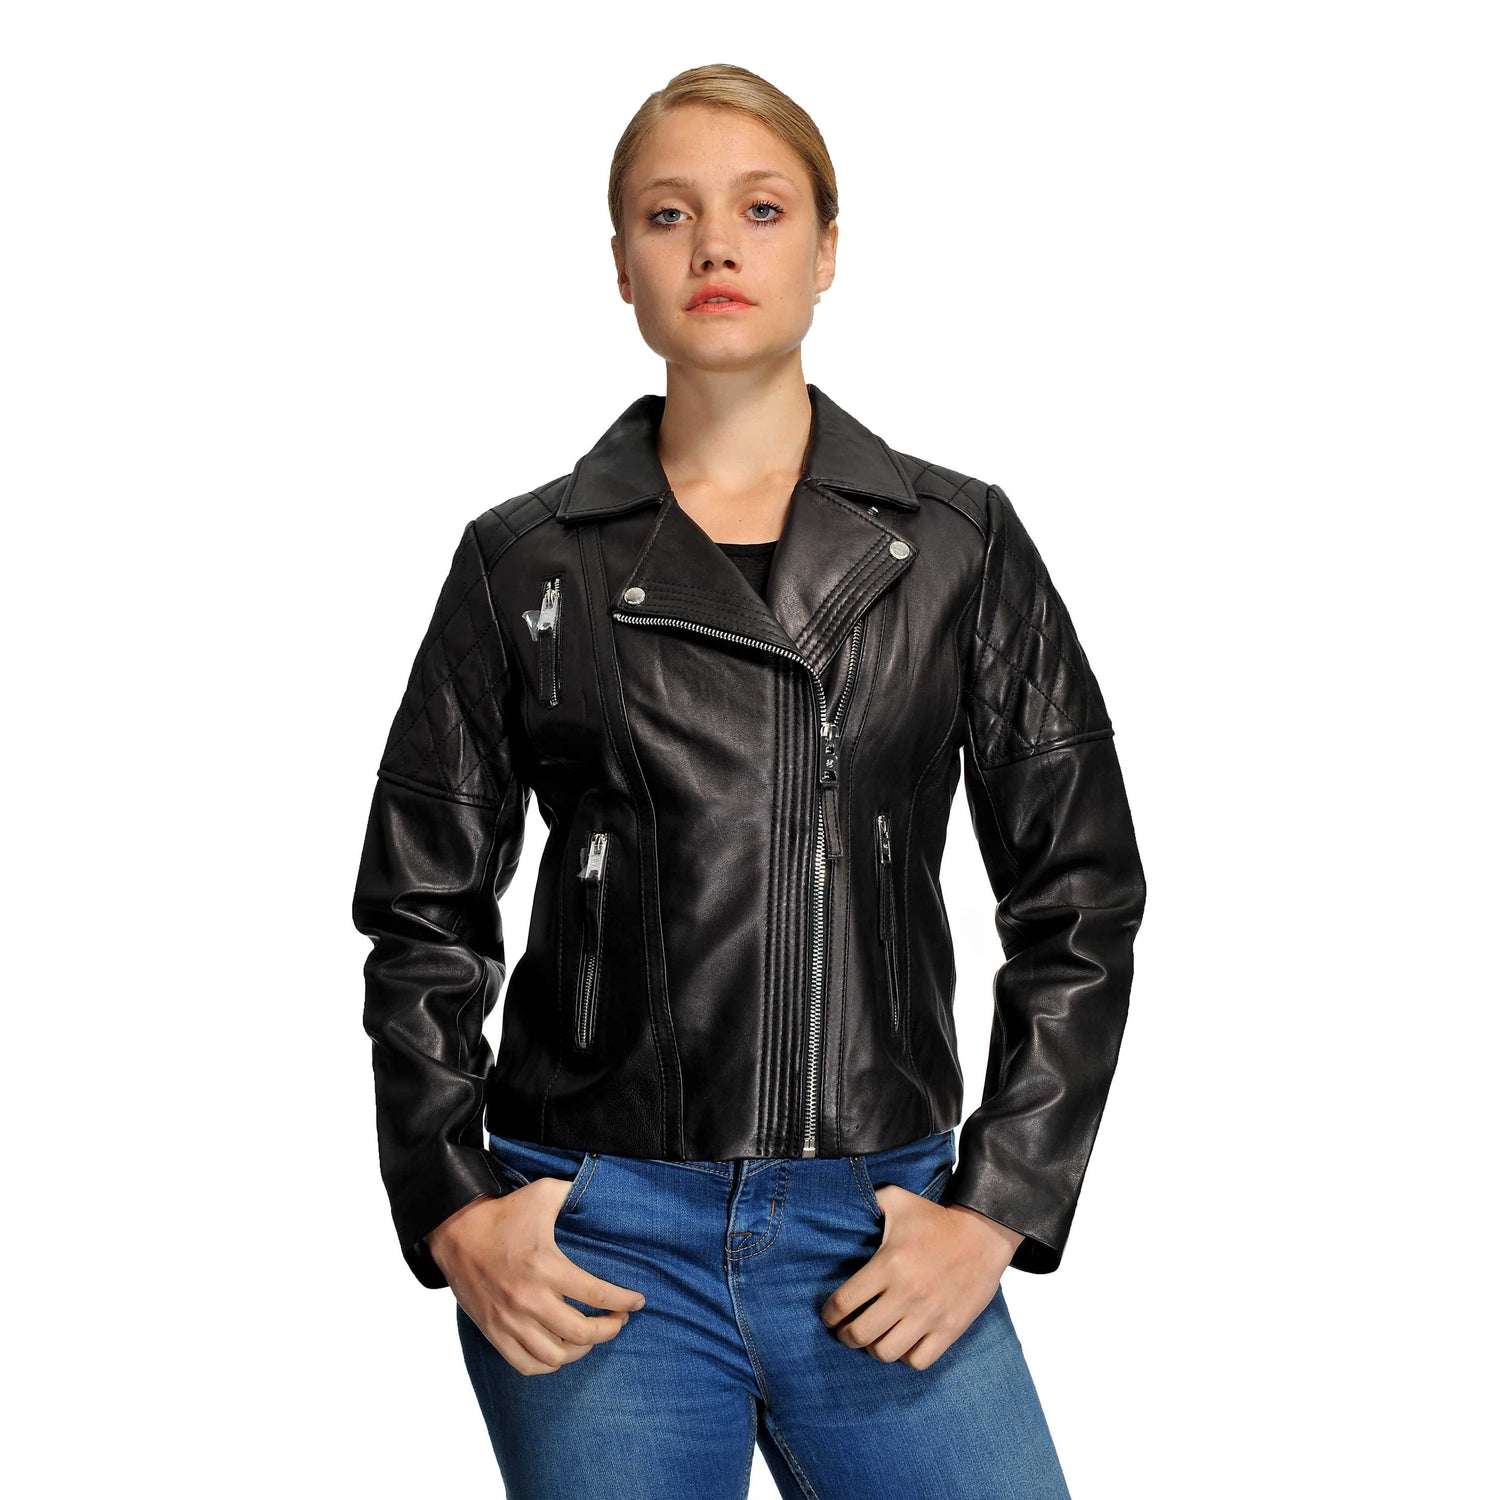 Michael Kors Ladies Leather Jacket Sale Online  benimk12tr 1689003413